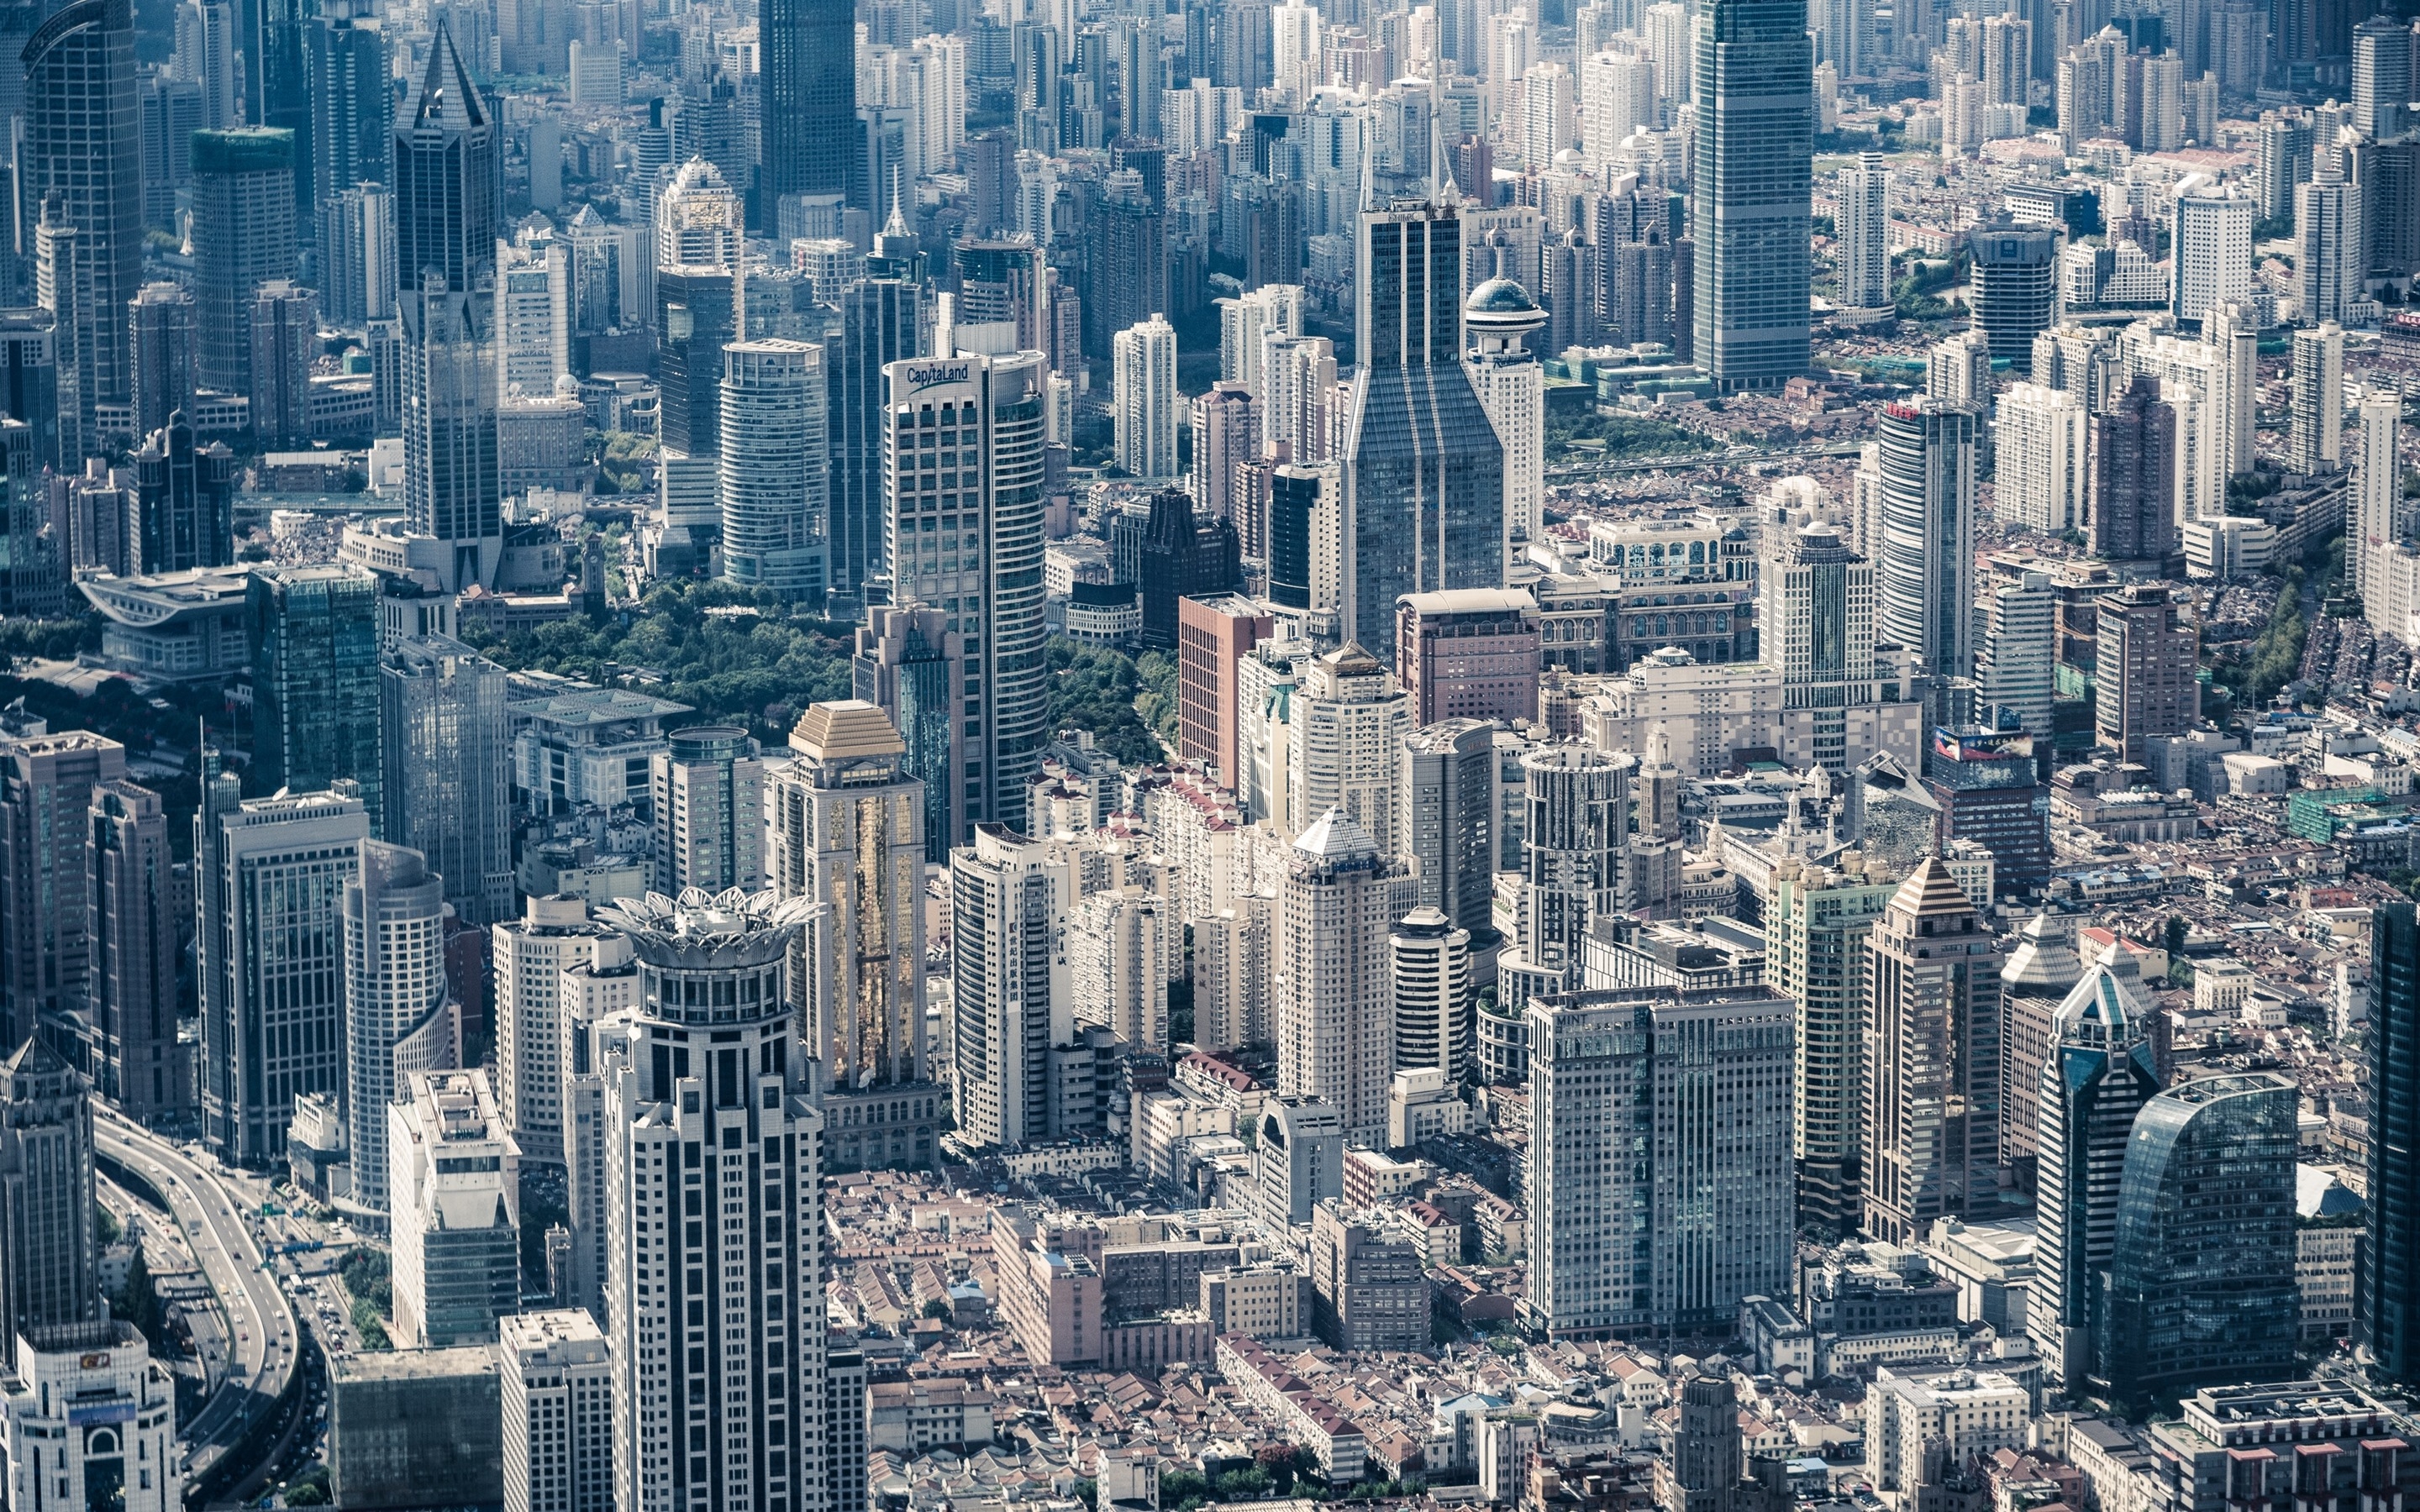 Skyscrapers in Shenzhen, China